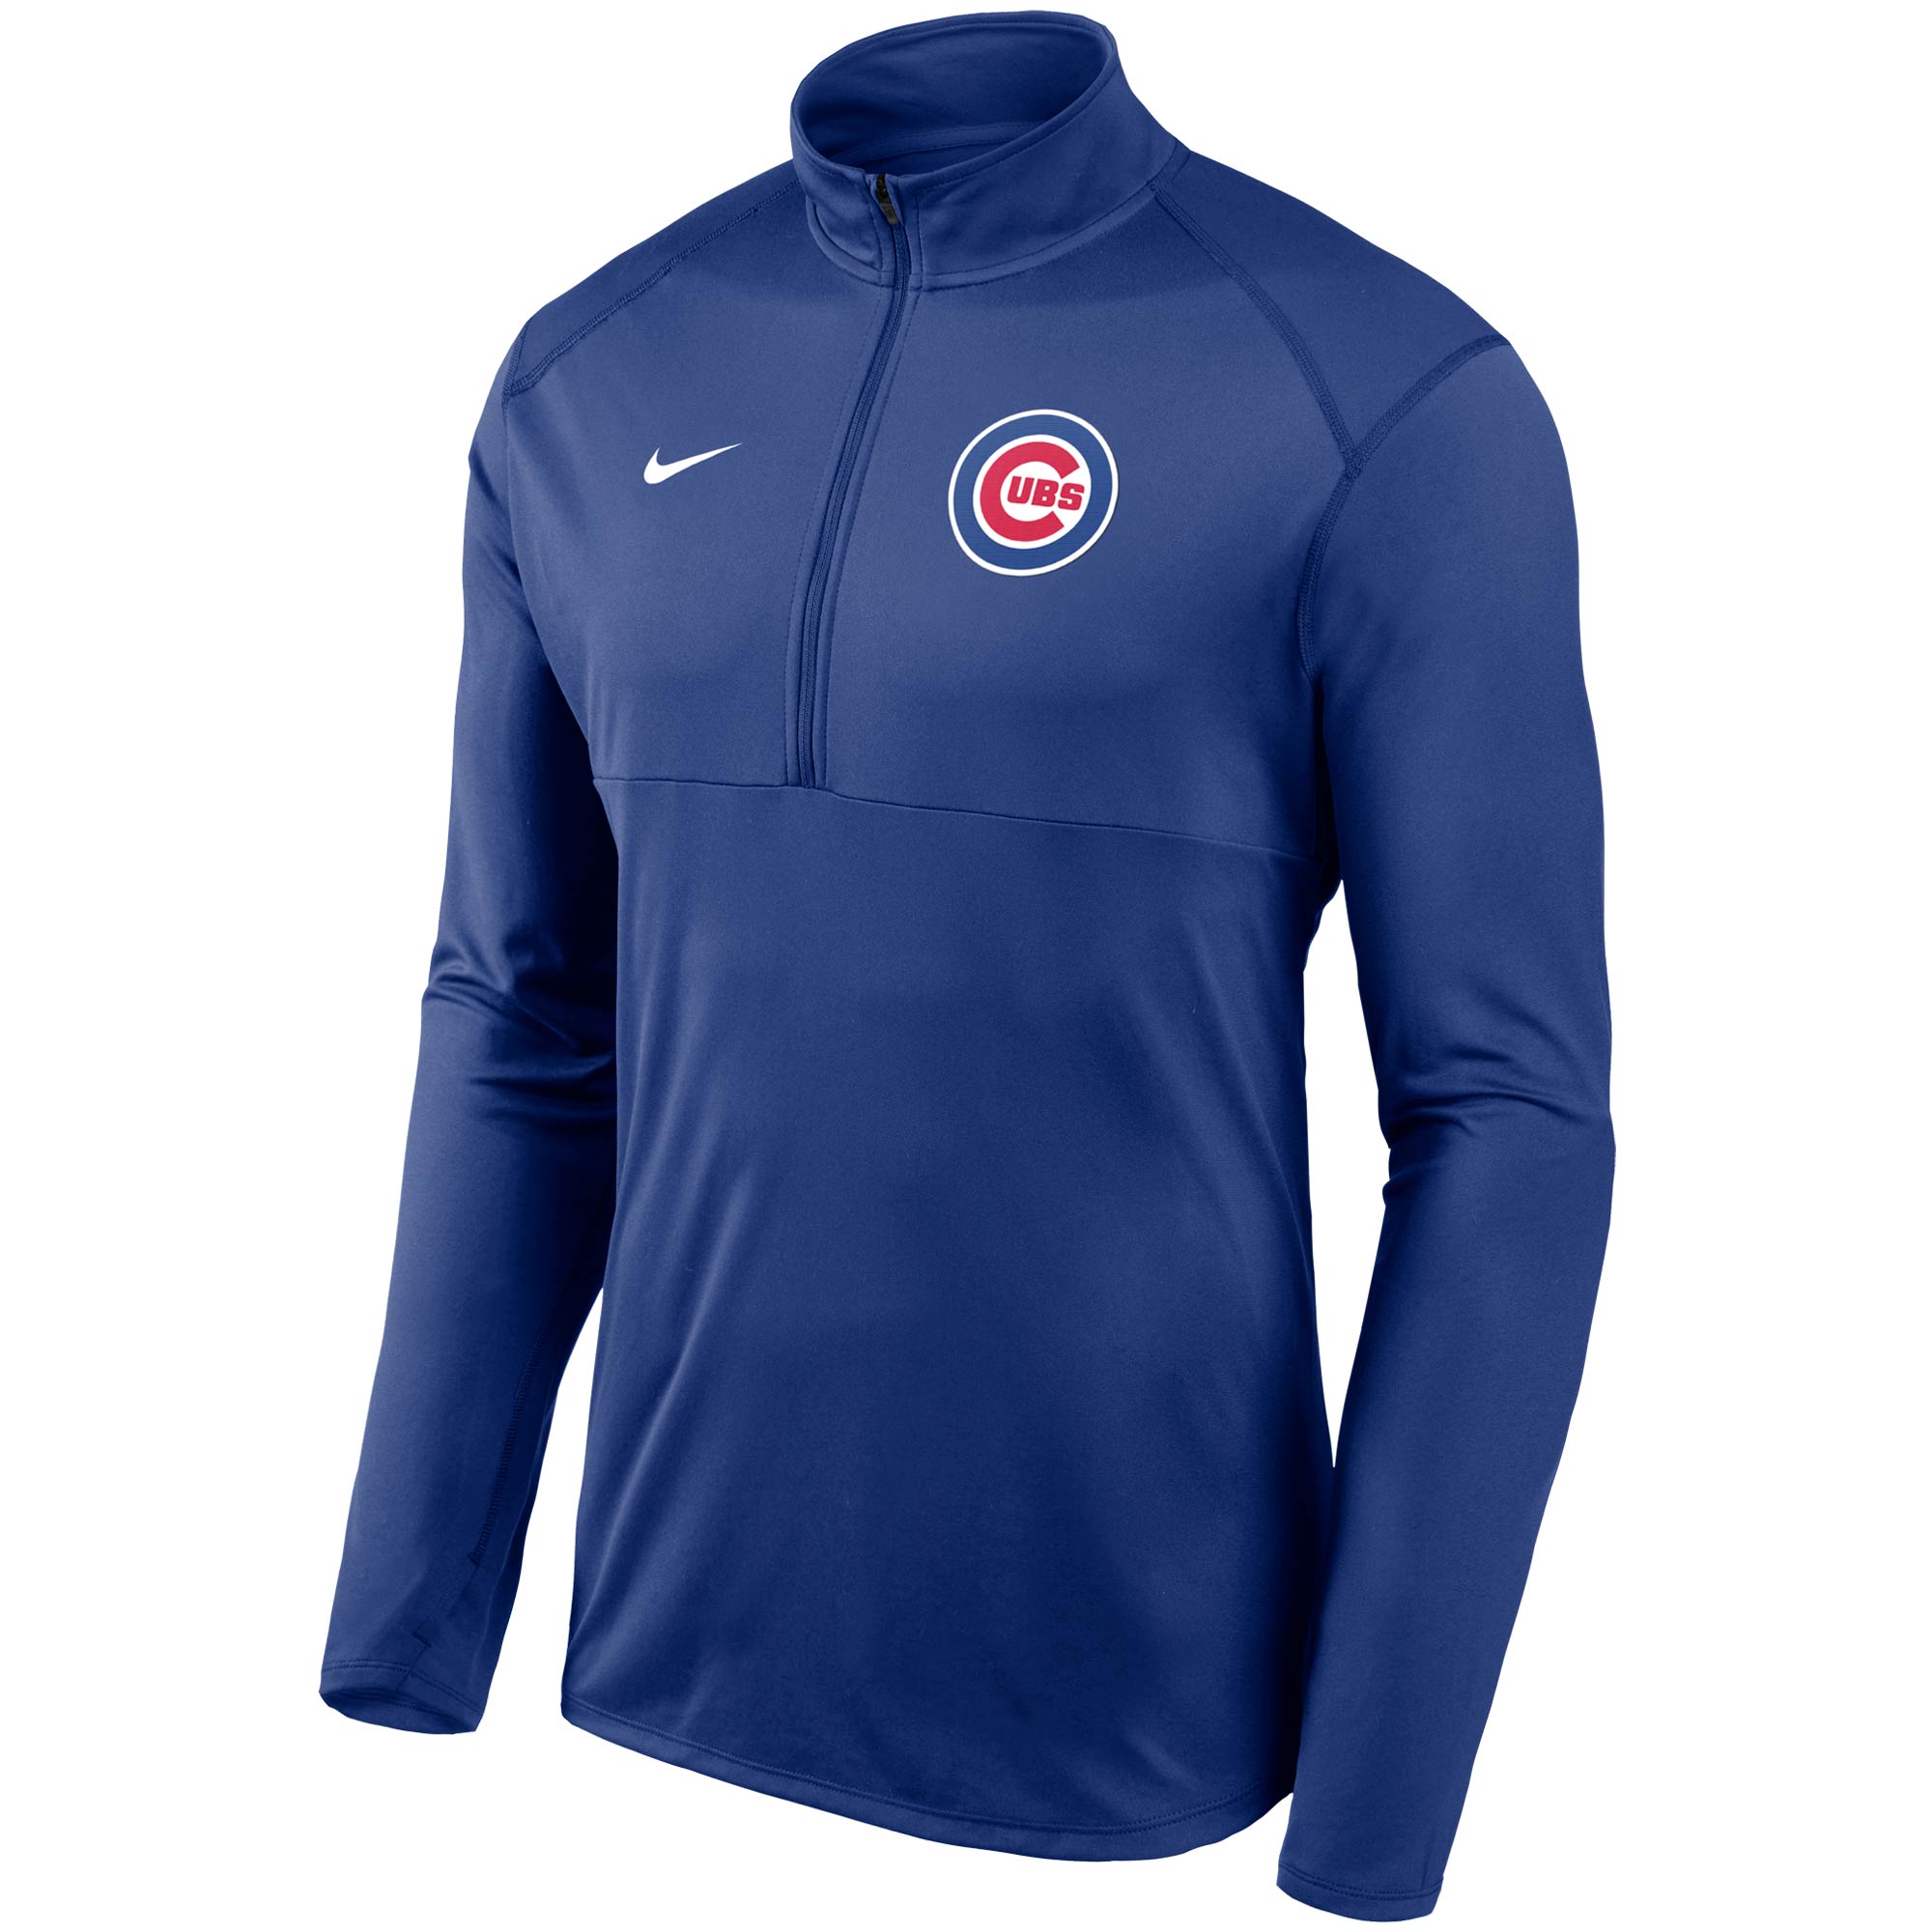 Men's Nike Royal Chicago Cubs Team Logo Element Performance Half-Zip Pullover Jacket - image 2 of 3